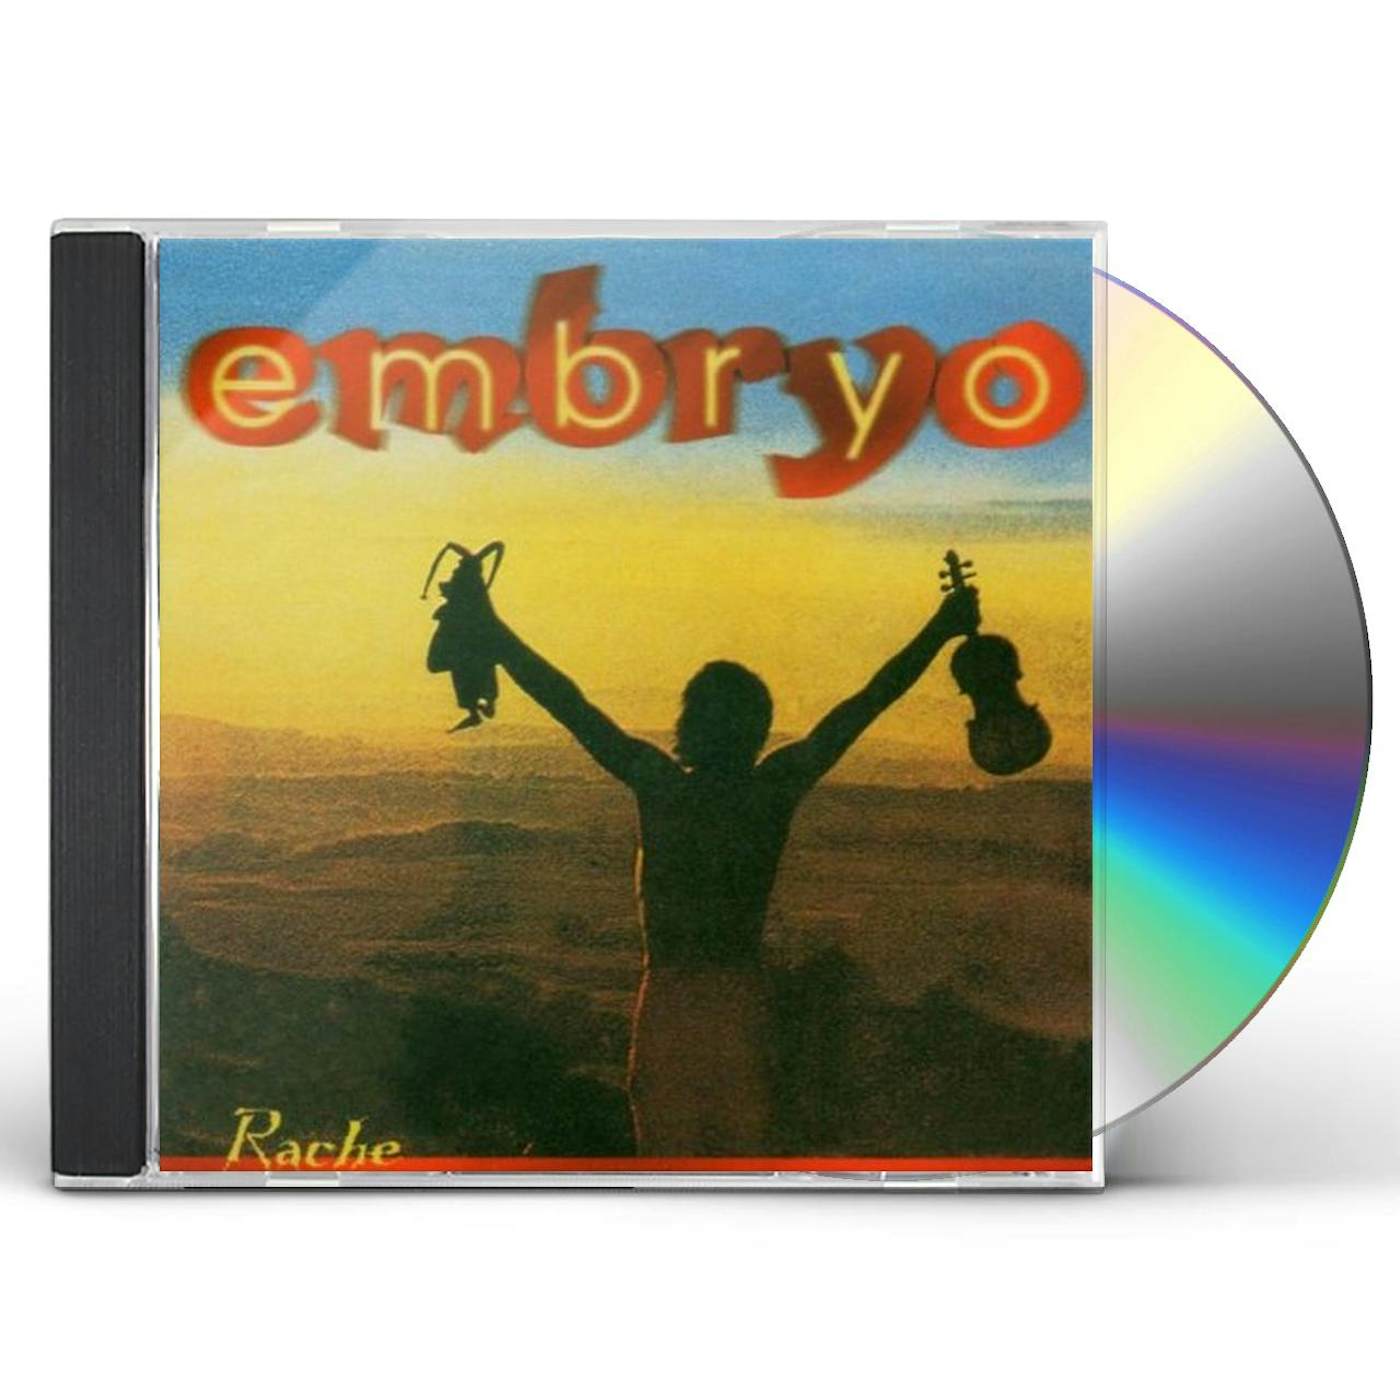 EMBRYO'S RACHE CD